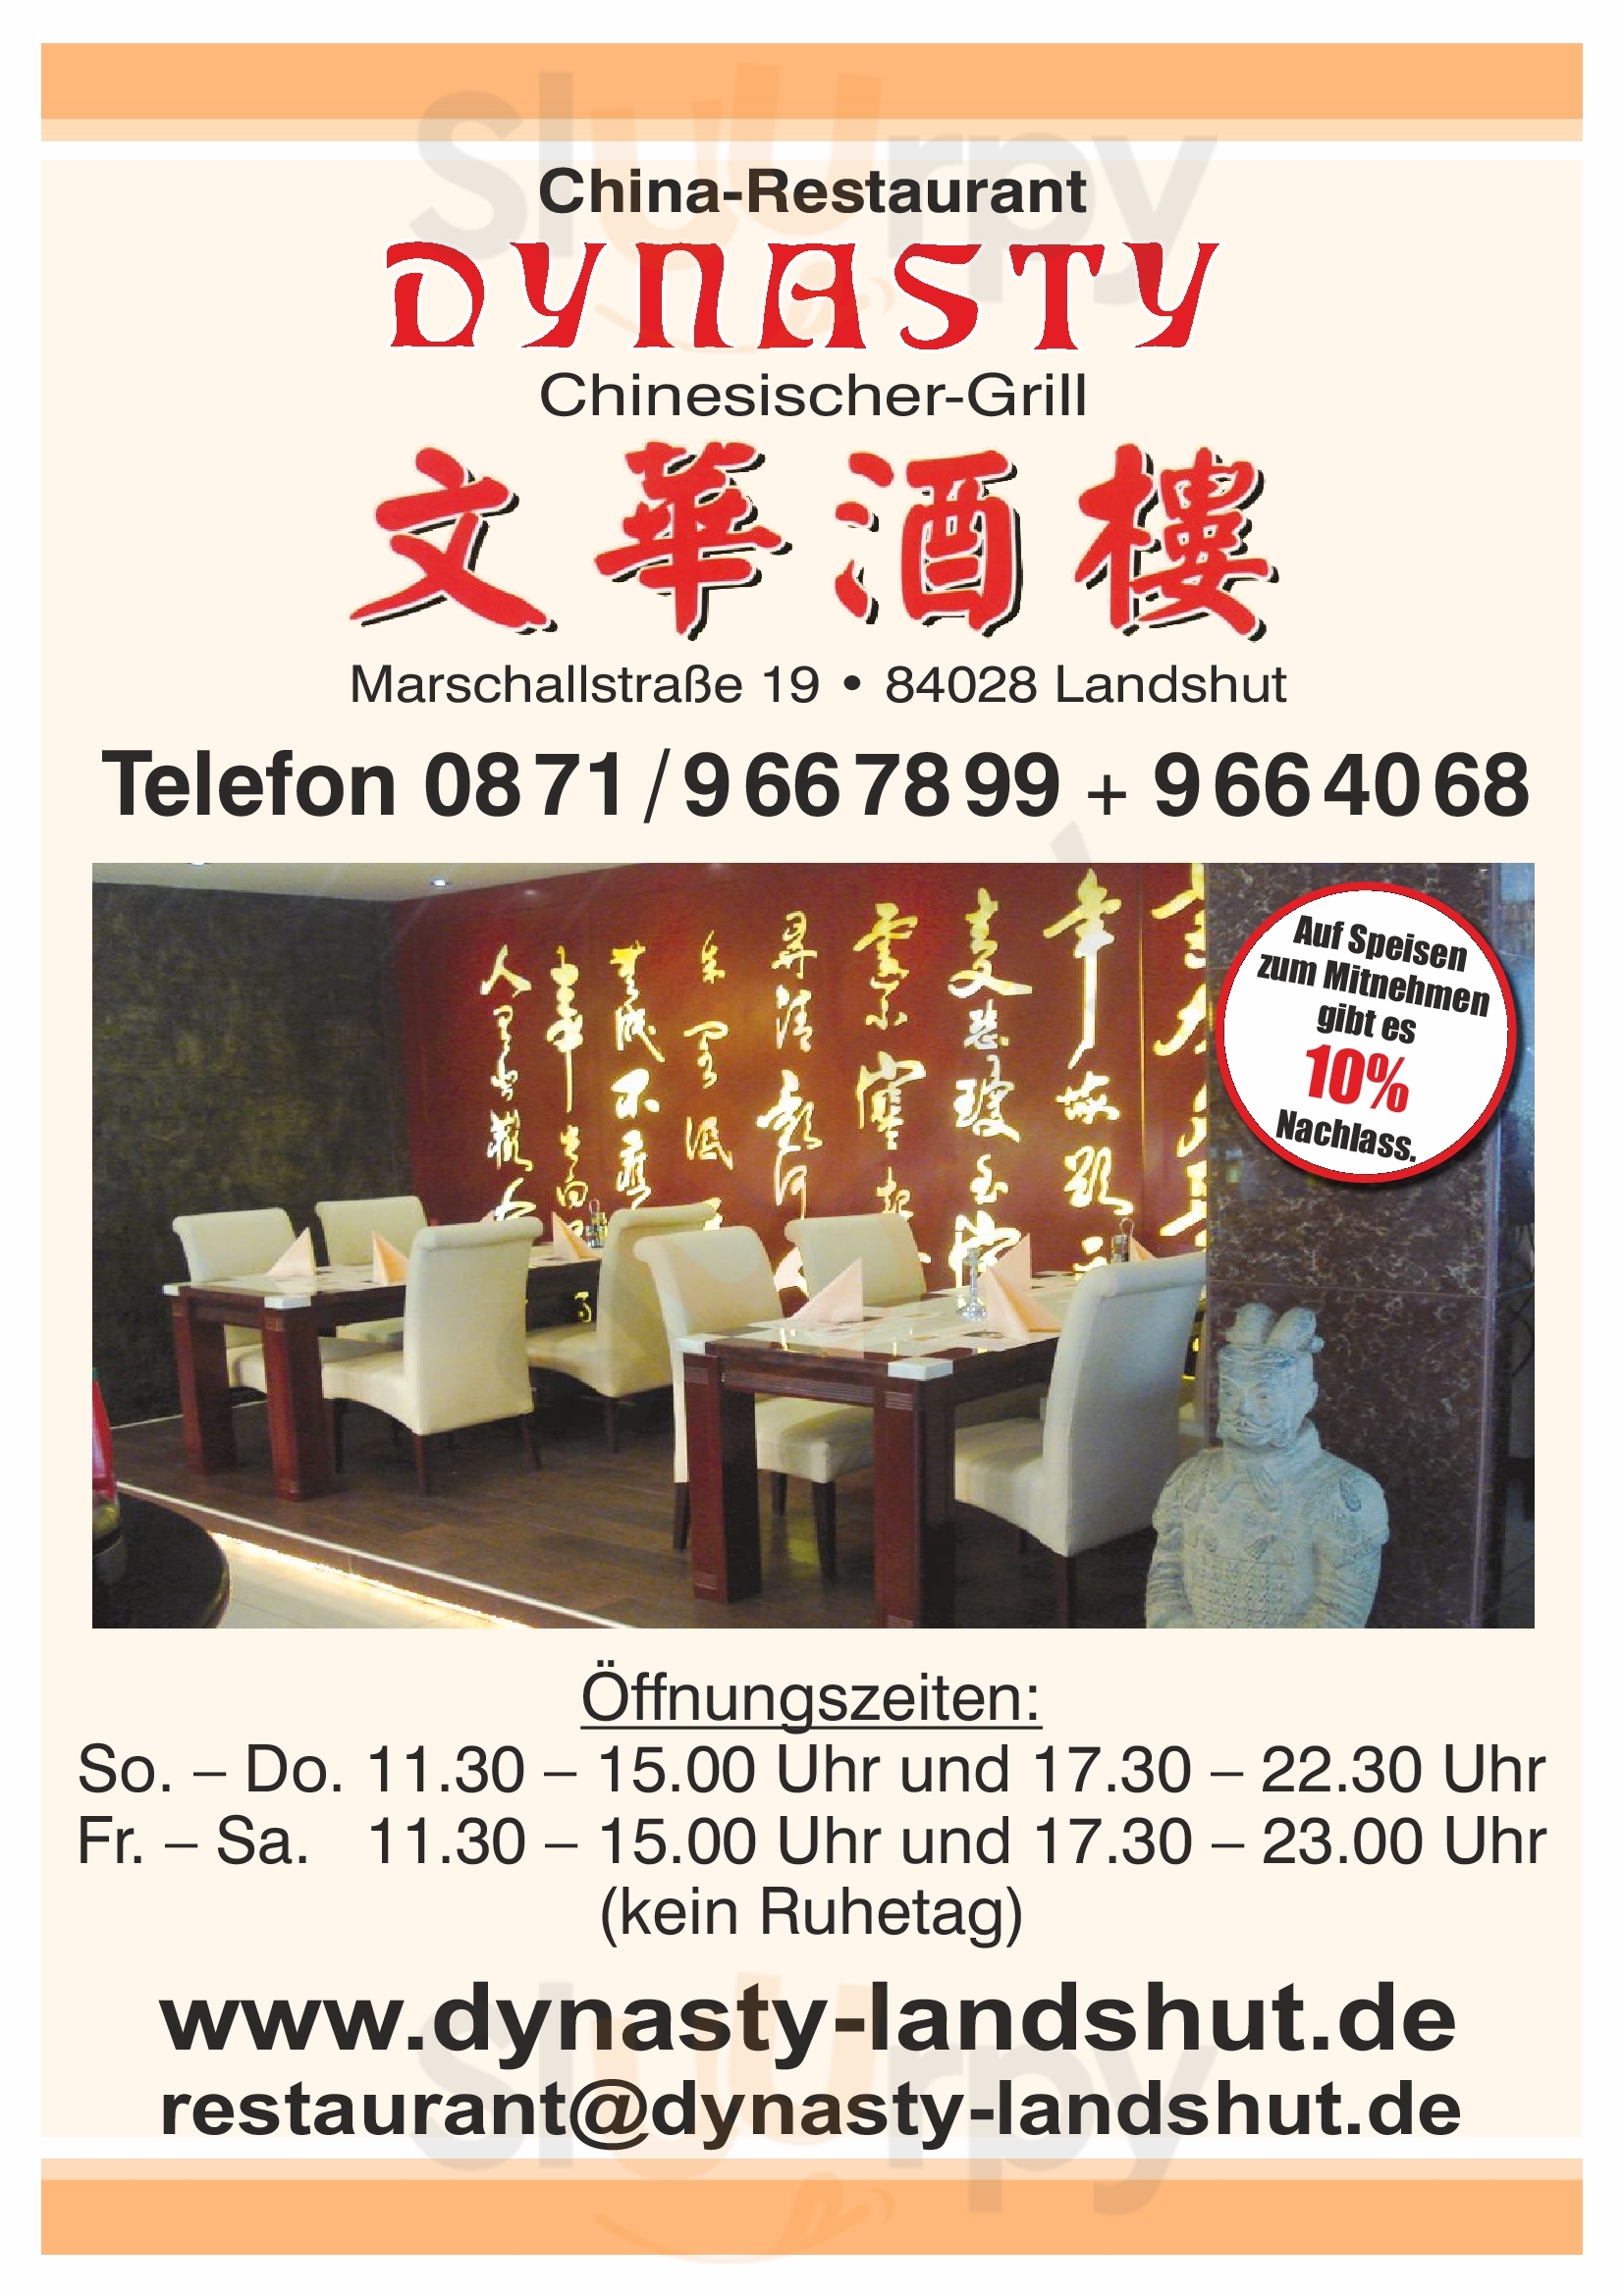 Chinarestaurant Dynasty Landshut Menu - 1